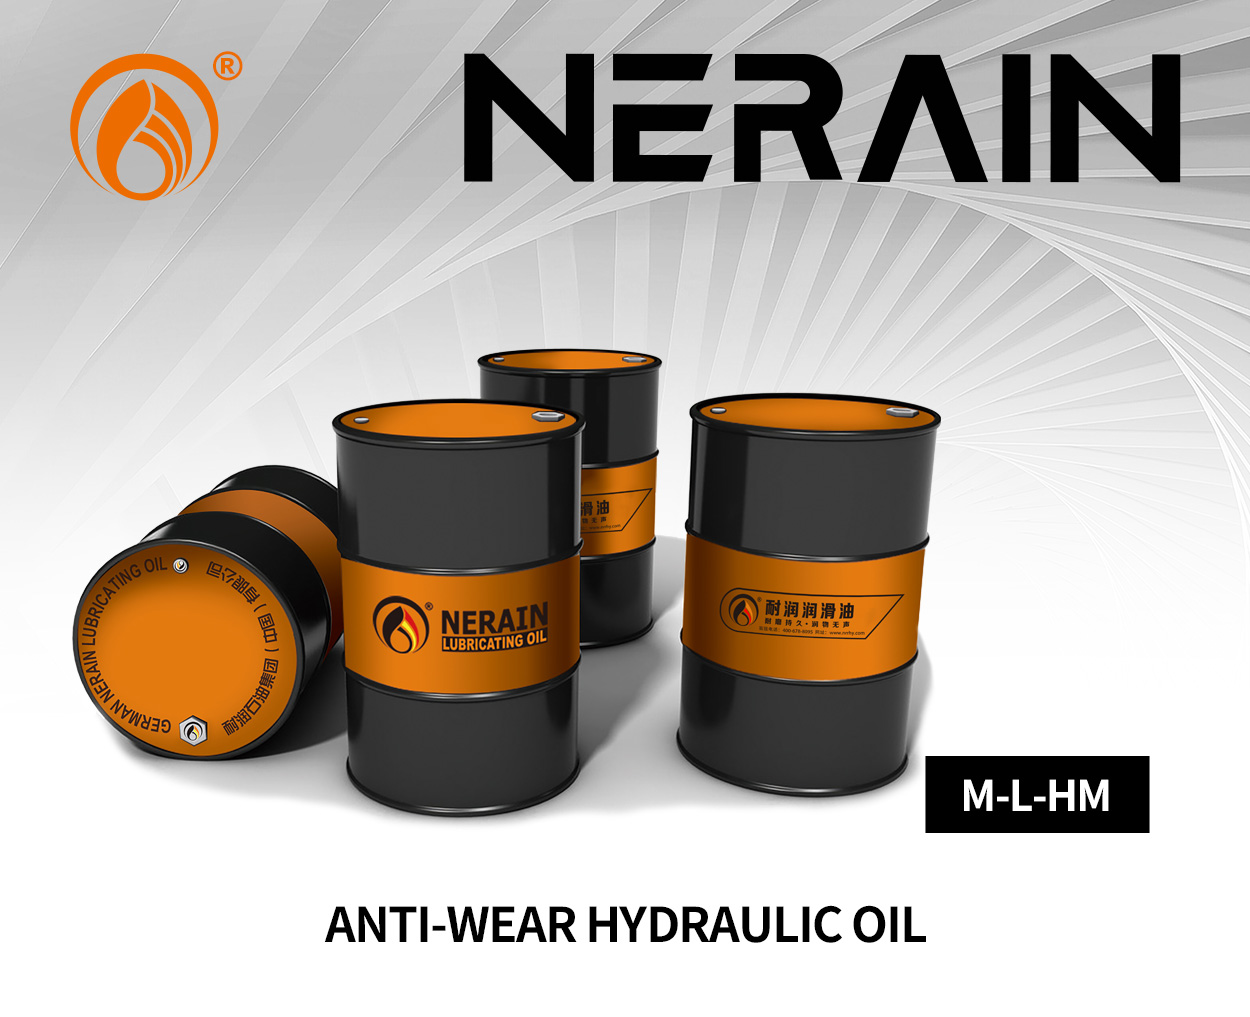 M-L-HM Anti-wear Hydraulic Oil